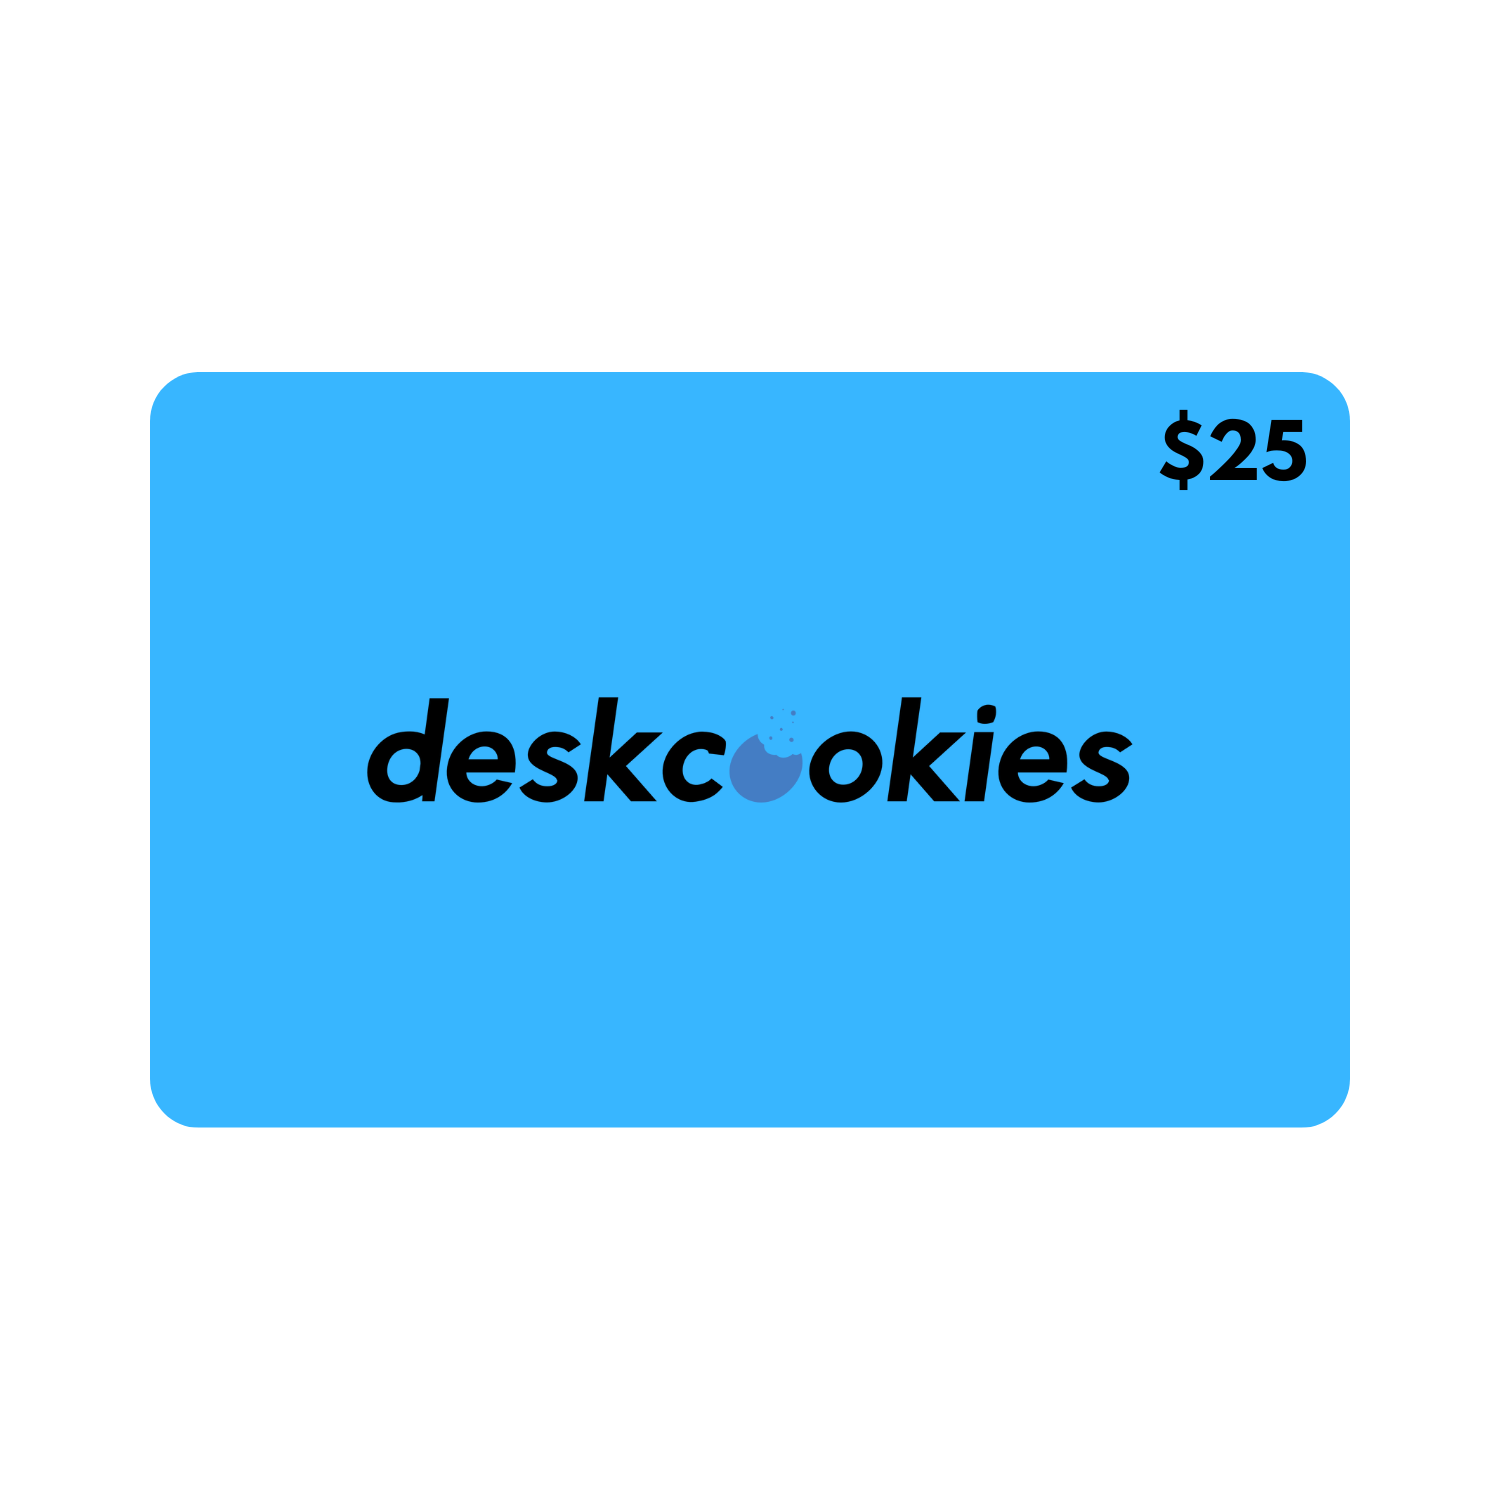 A $25 Desk Cookies digital gift card.